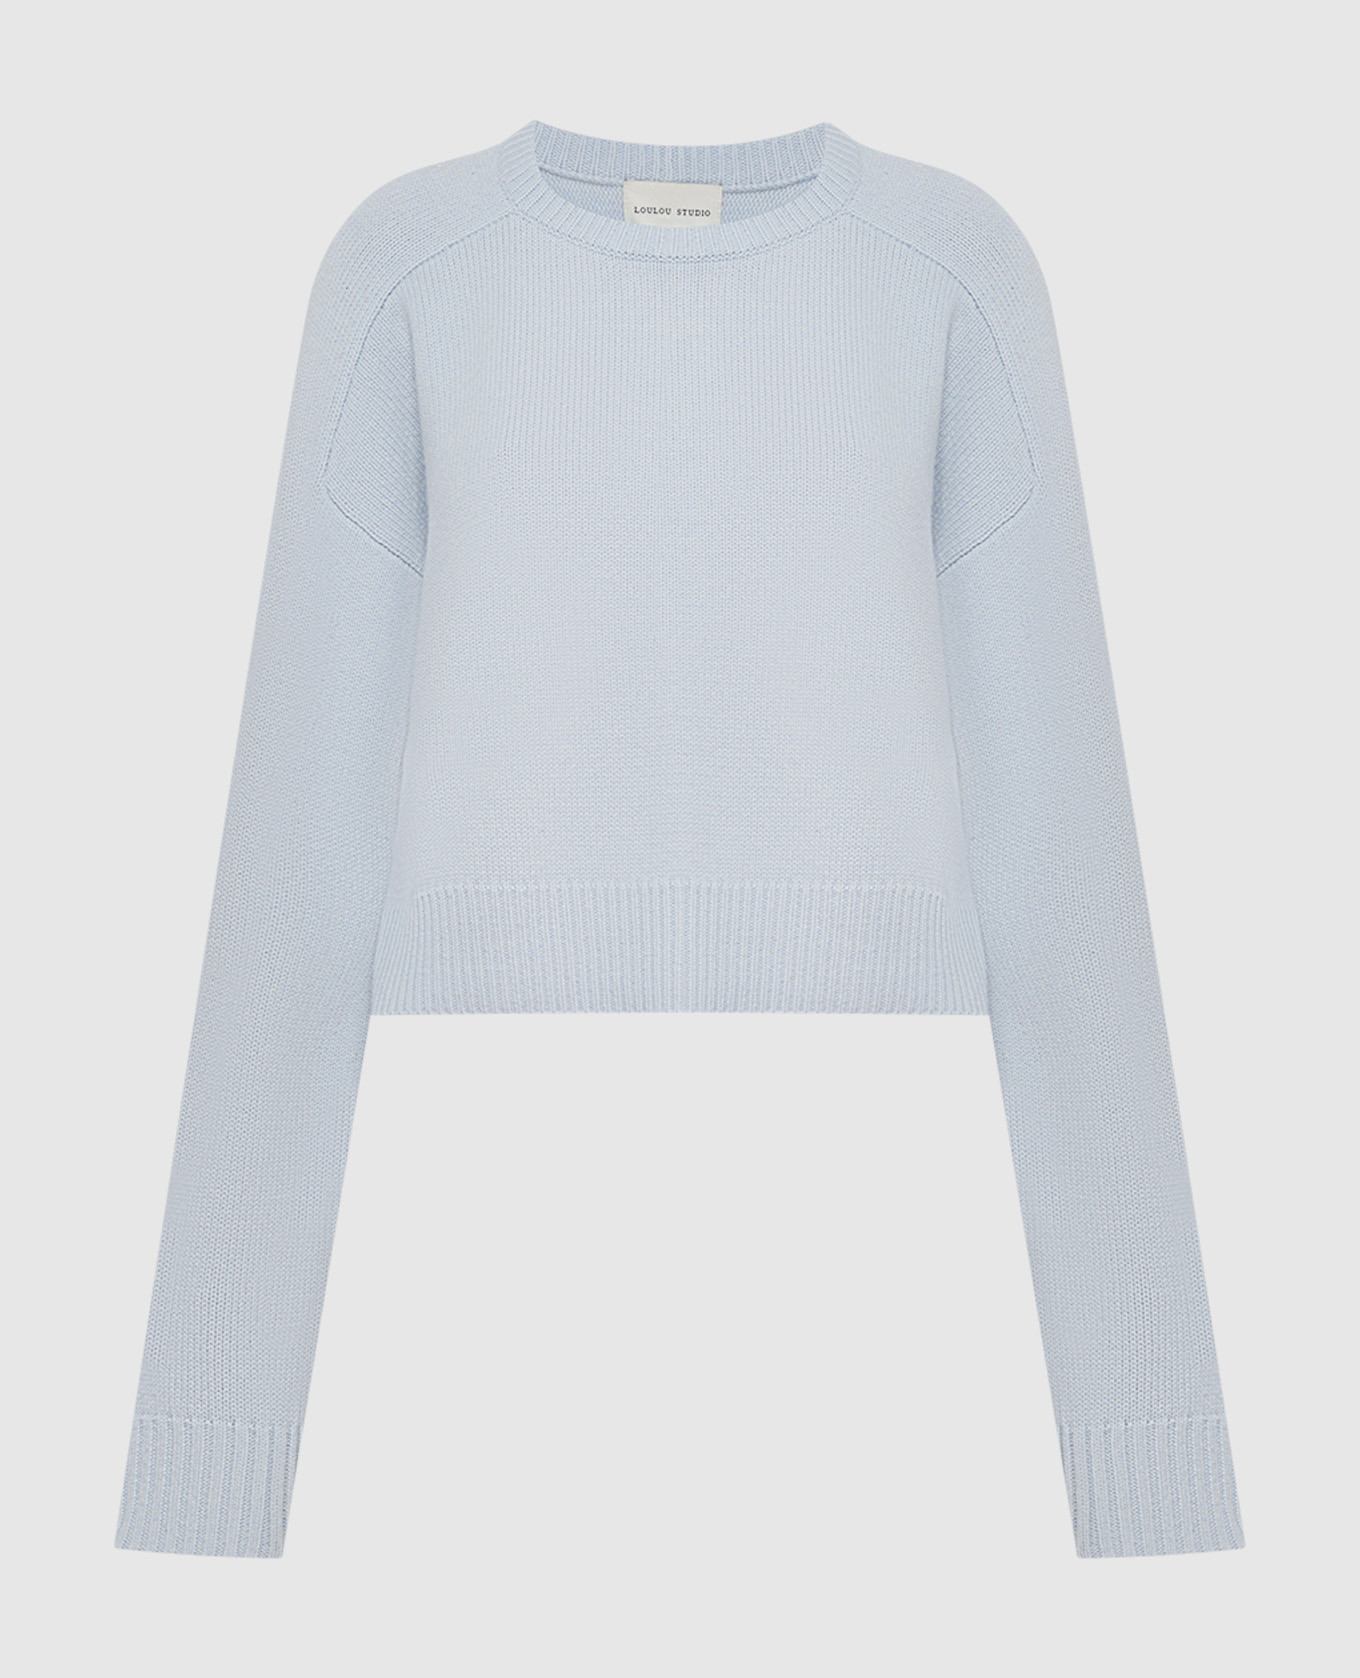 BRUZZI blue wool and cashmere sweater